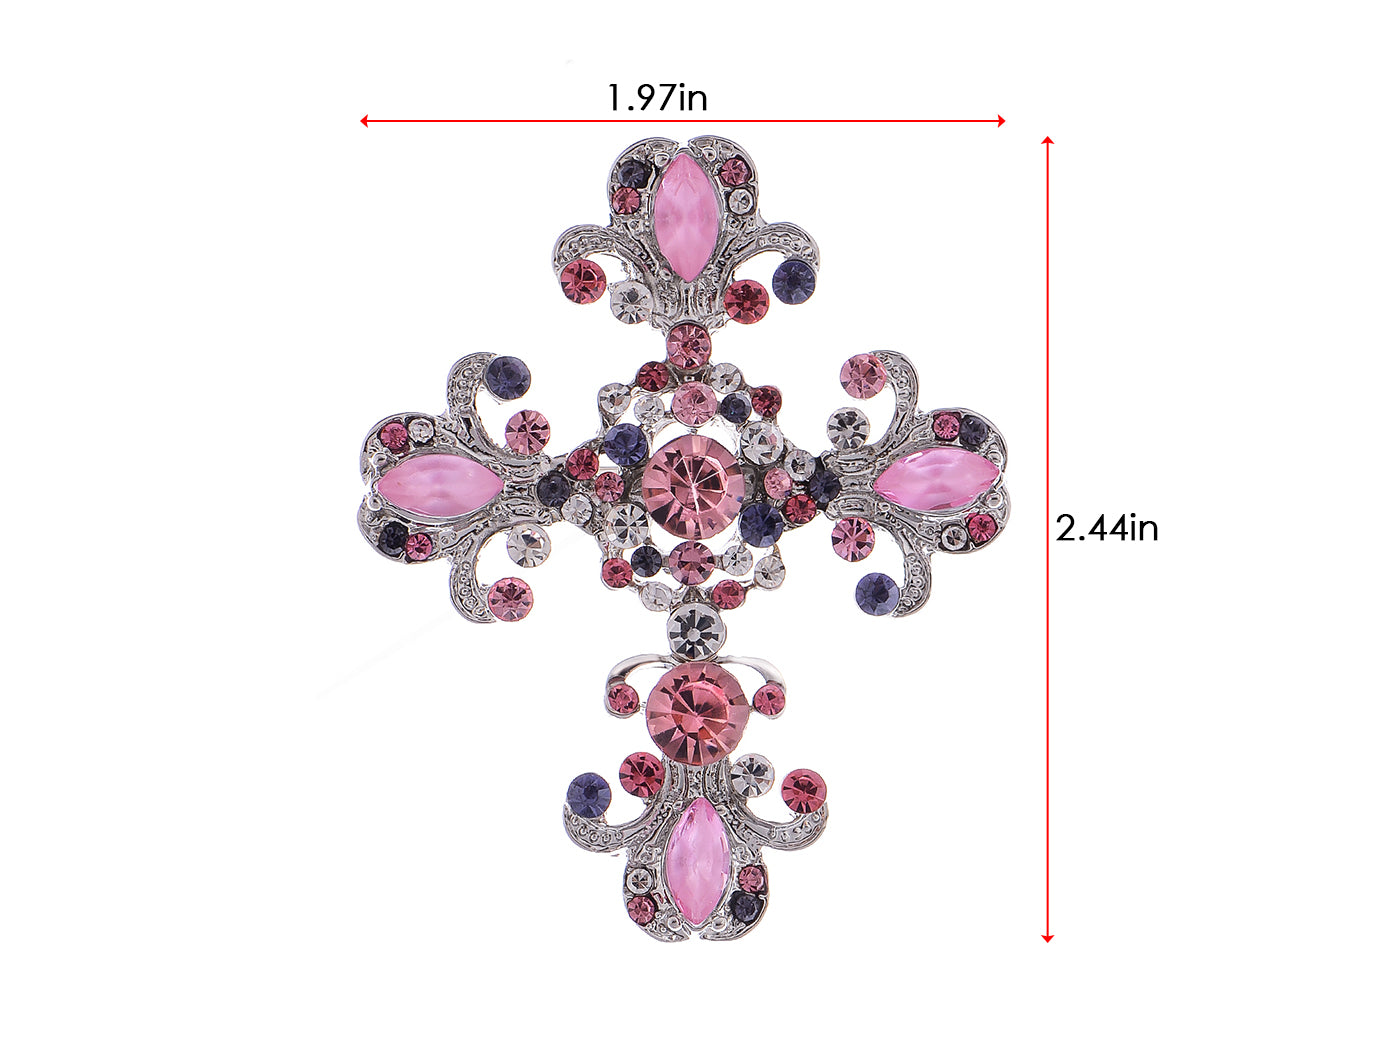 Antique Shine Pink Purple Pastel Holy Cross Brooch Pin